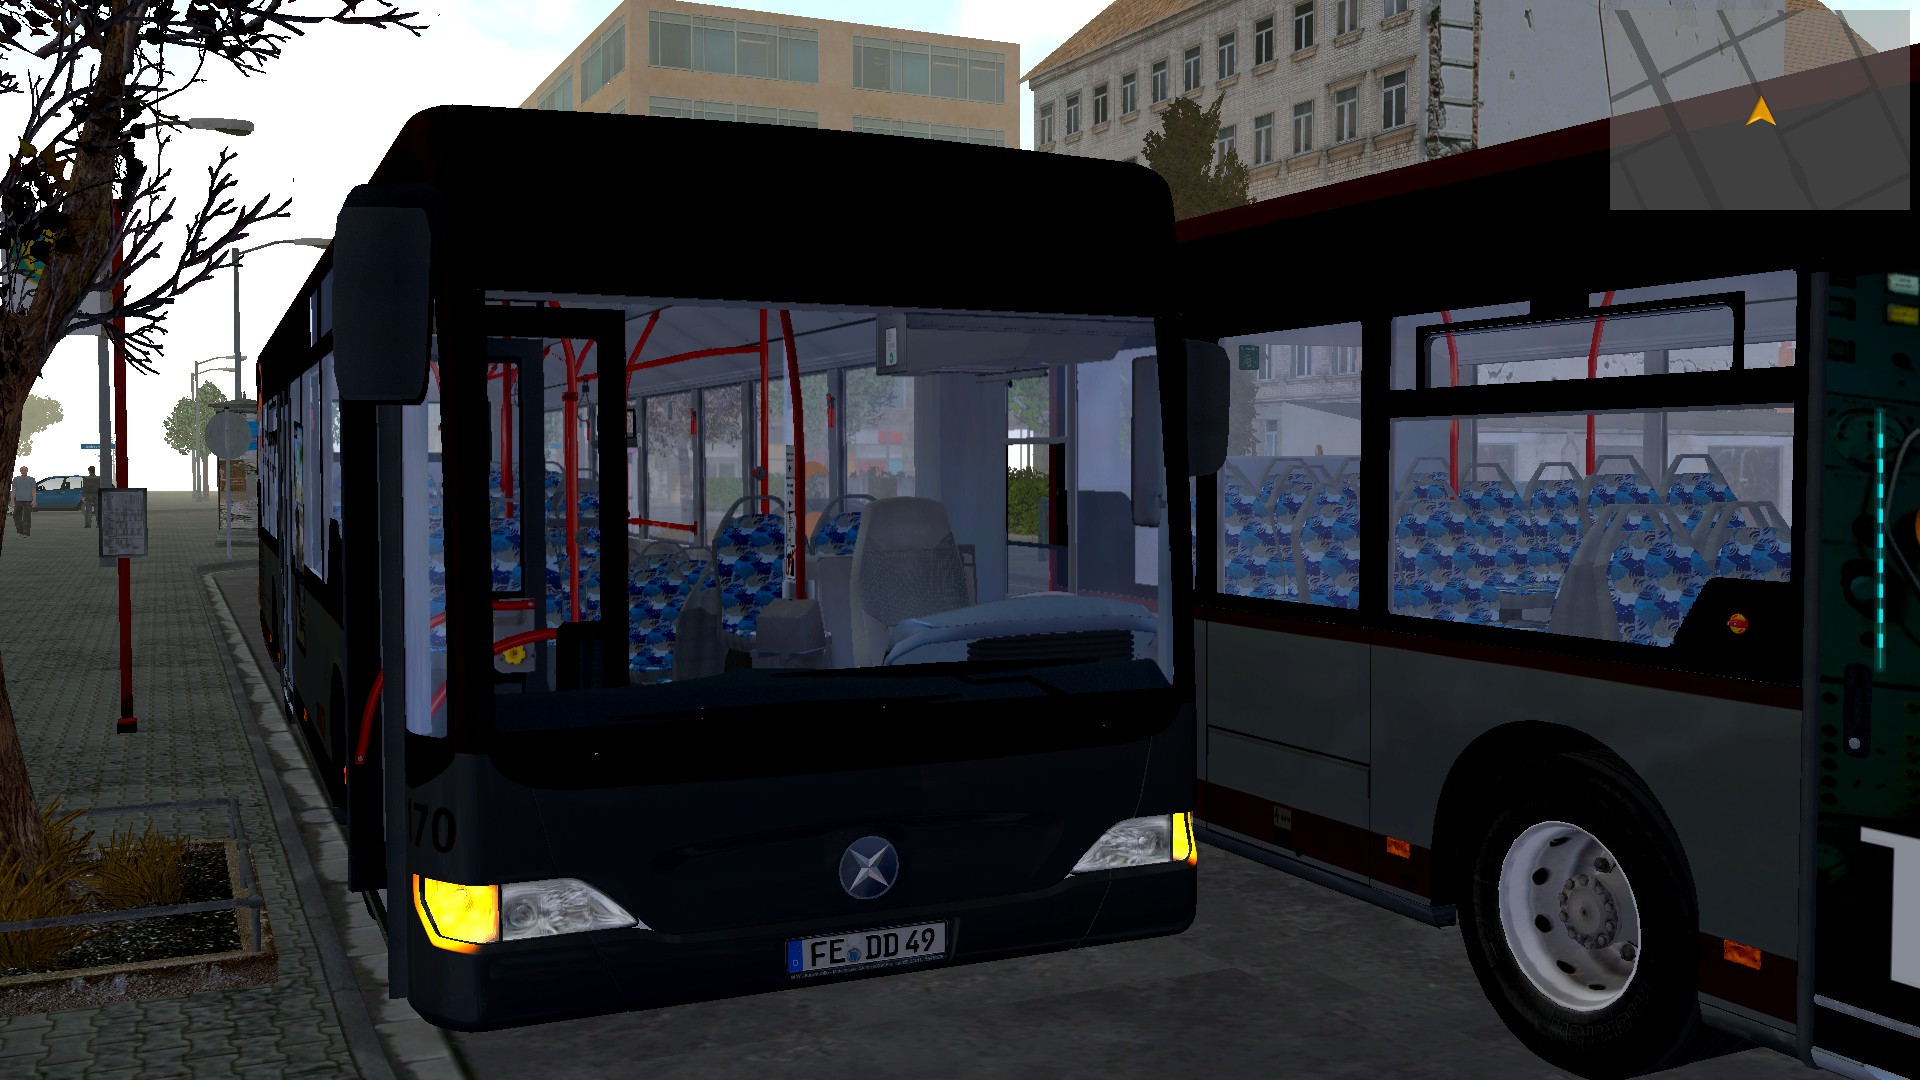 bus simulator 21 trophy guide